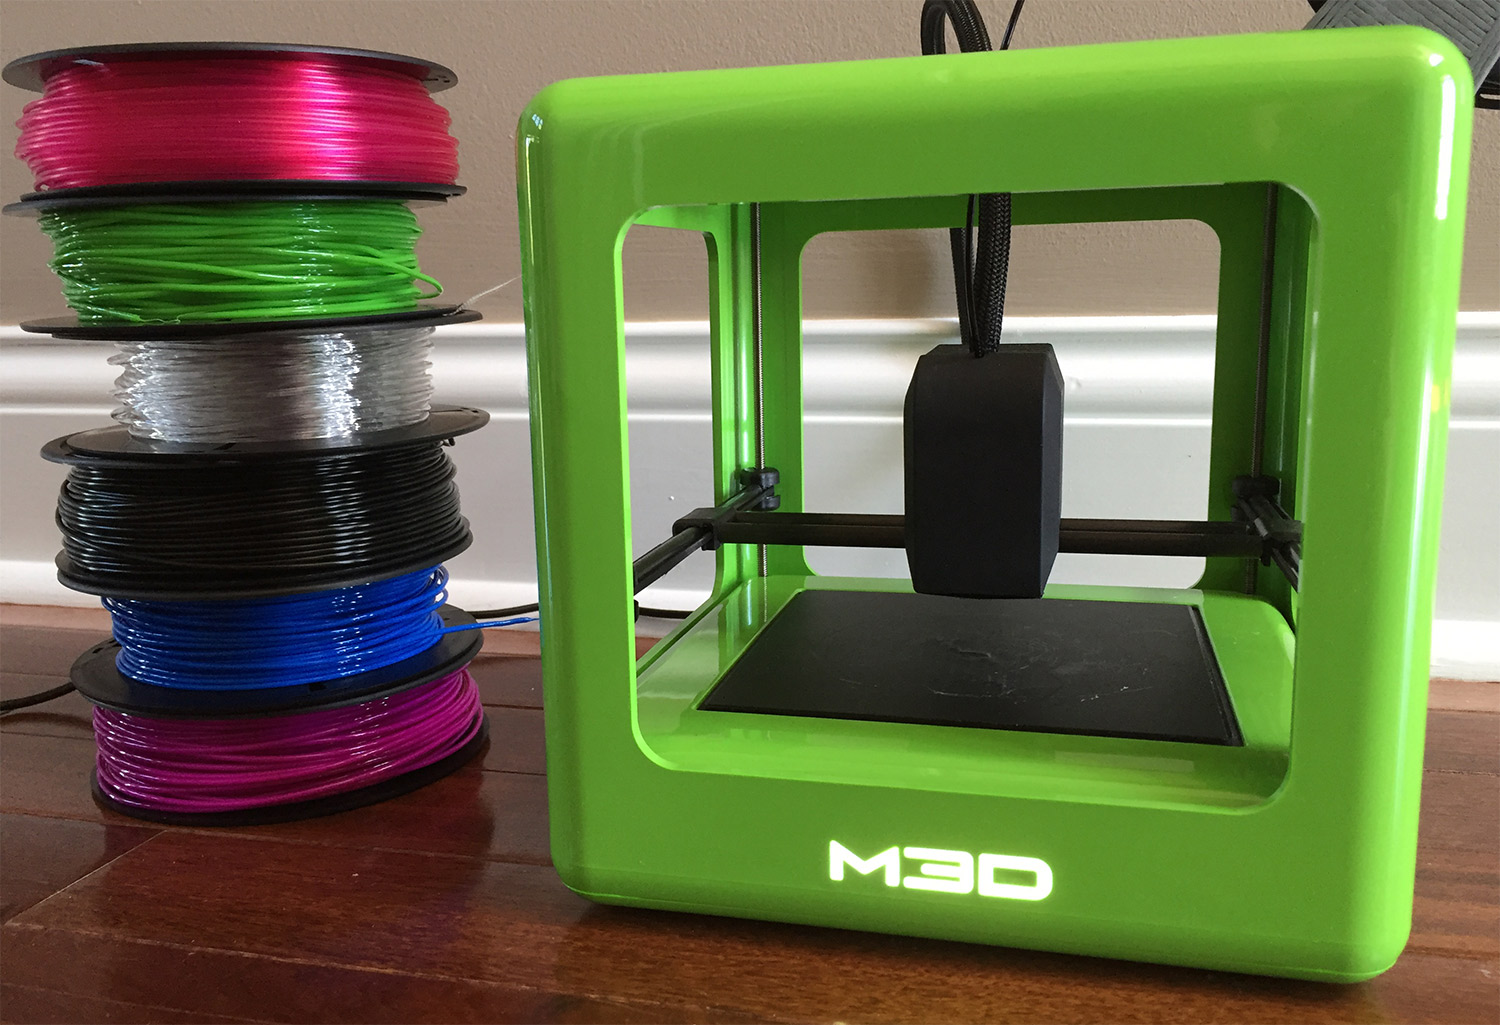 REVIEW: M3D Micro 3D Printer - M3Dmicro